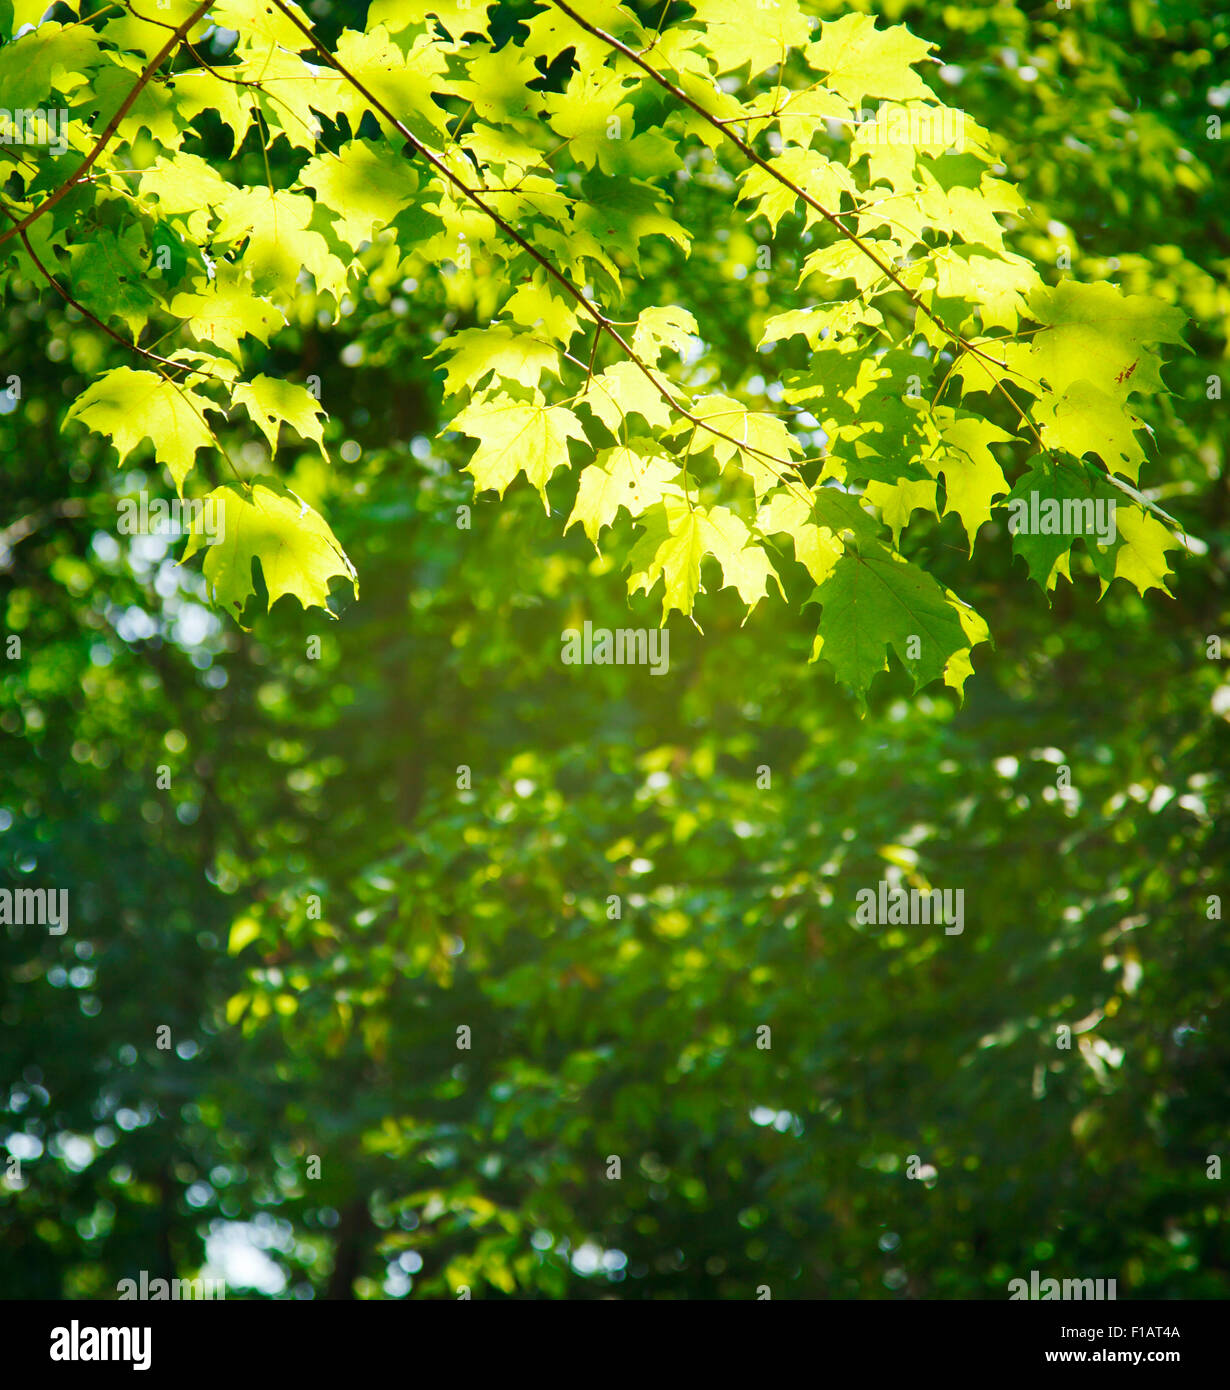 Maple tree on blurred nature background Stock Photo